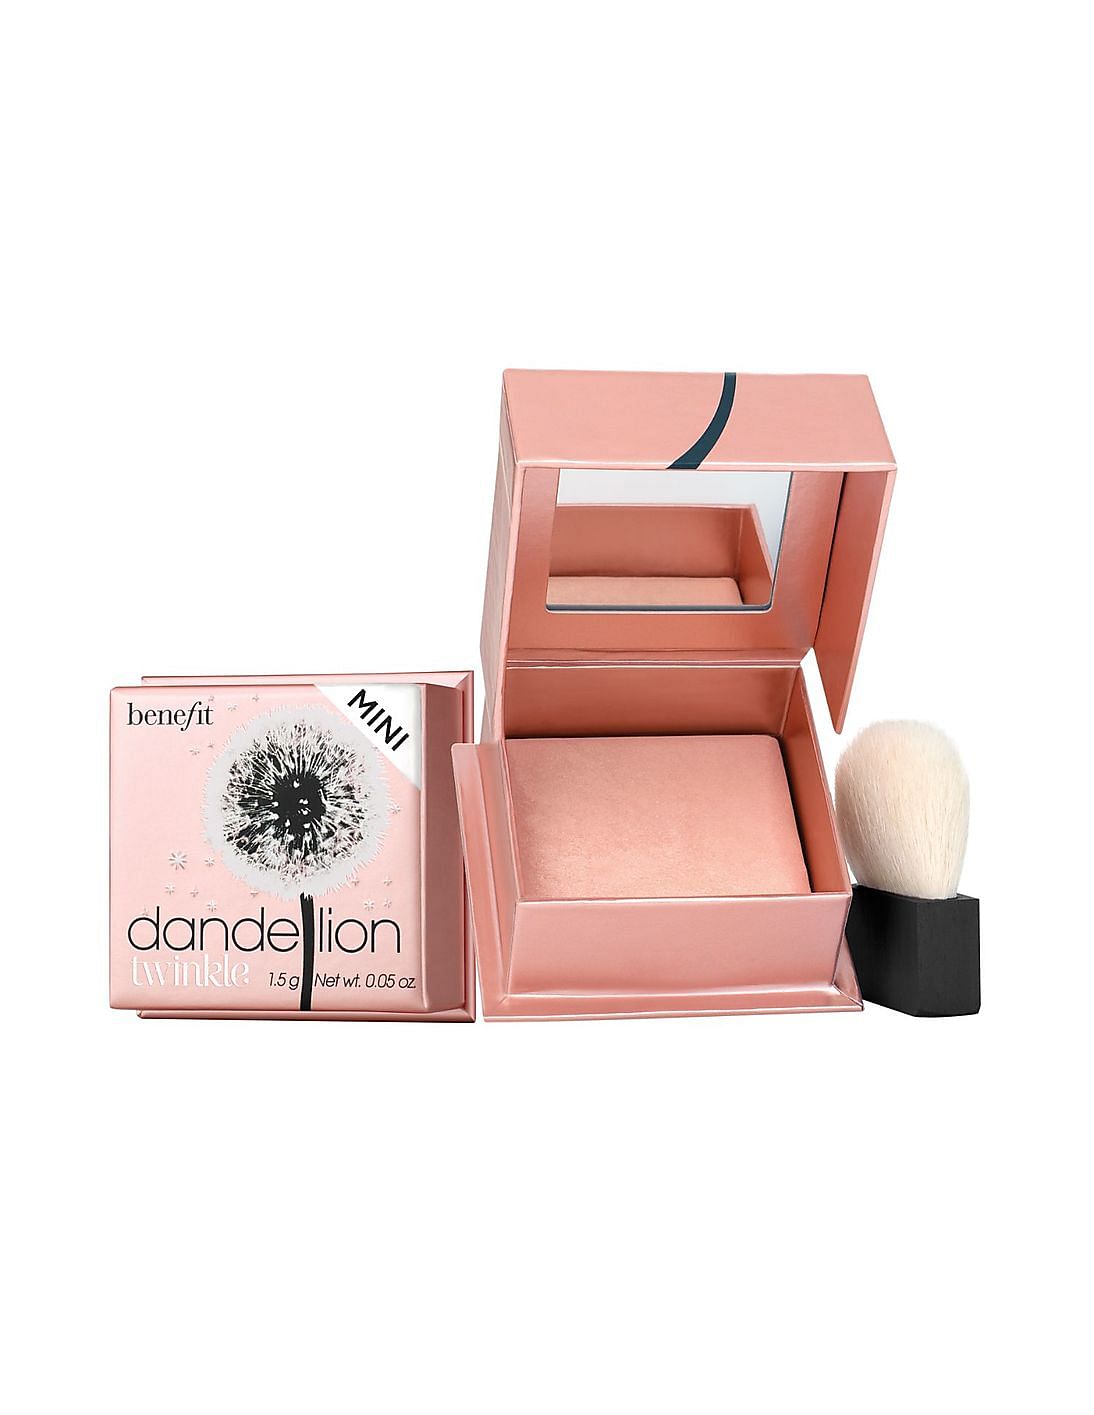 Benefit Cosmetics Dandelion Twinkle Nude-Pink Highlighter Powder Mini